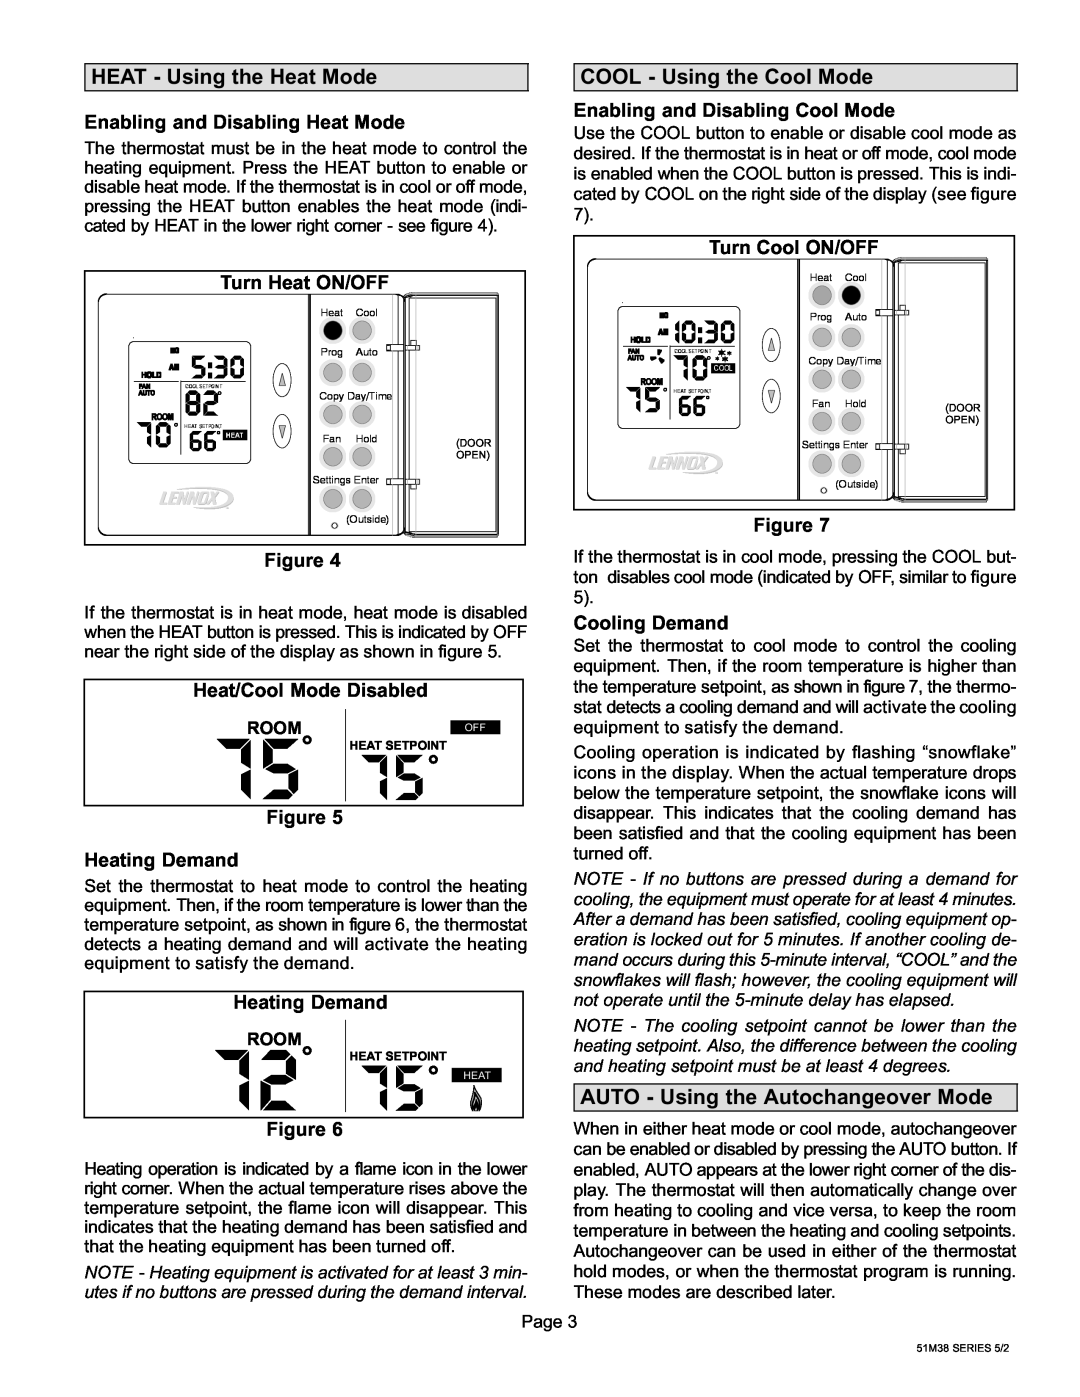 Lennox International Inc 51M37 operation manual i0, HEAT − Using the Heat Mode, COOL − Using the Cool Mode 